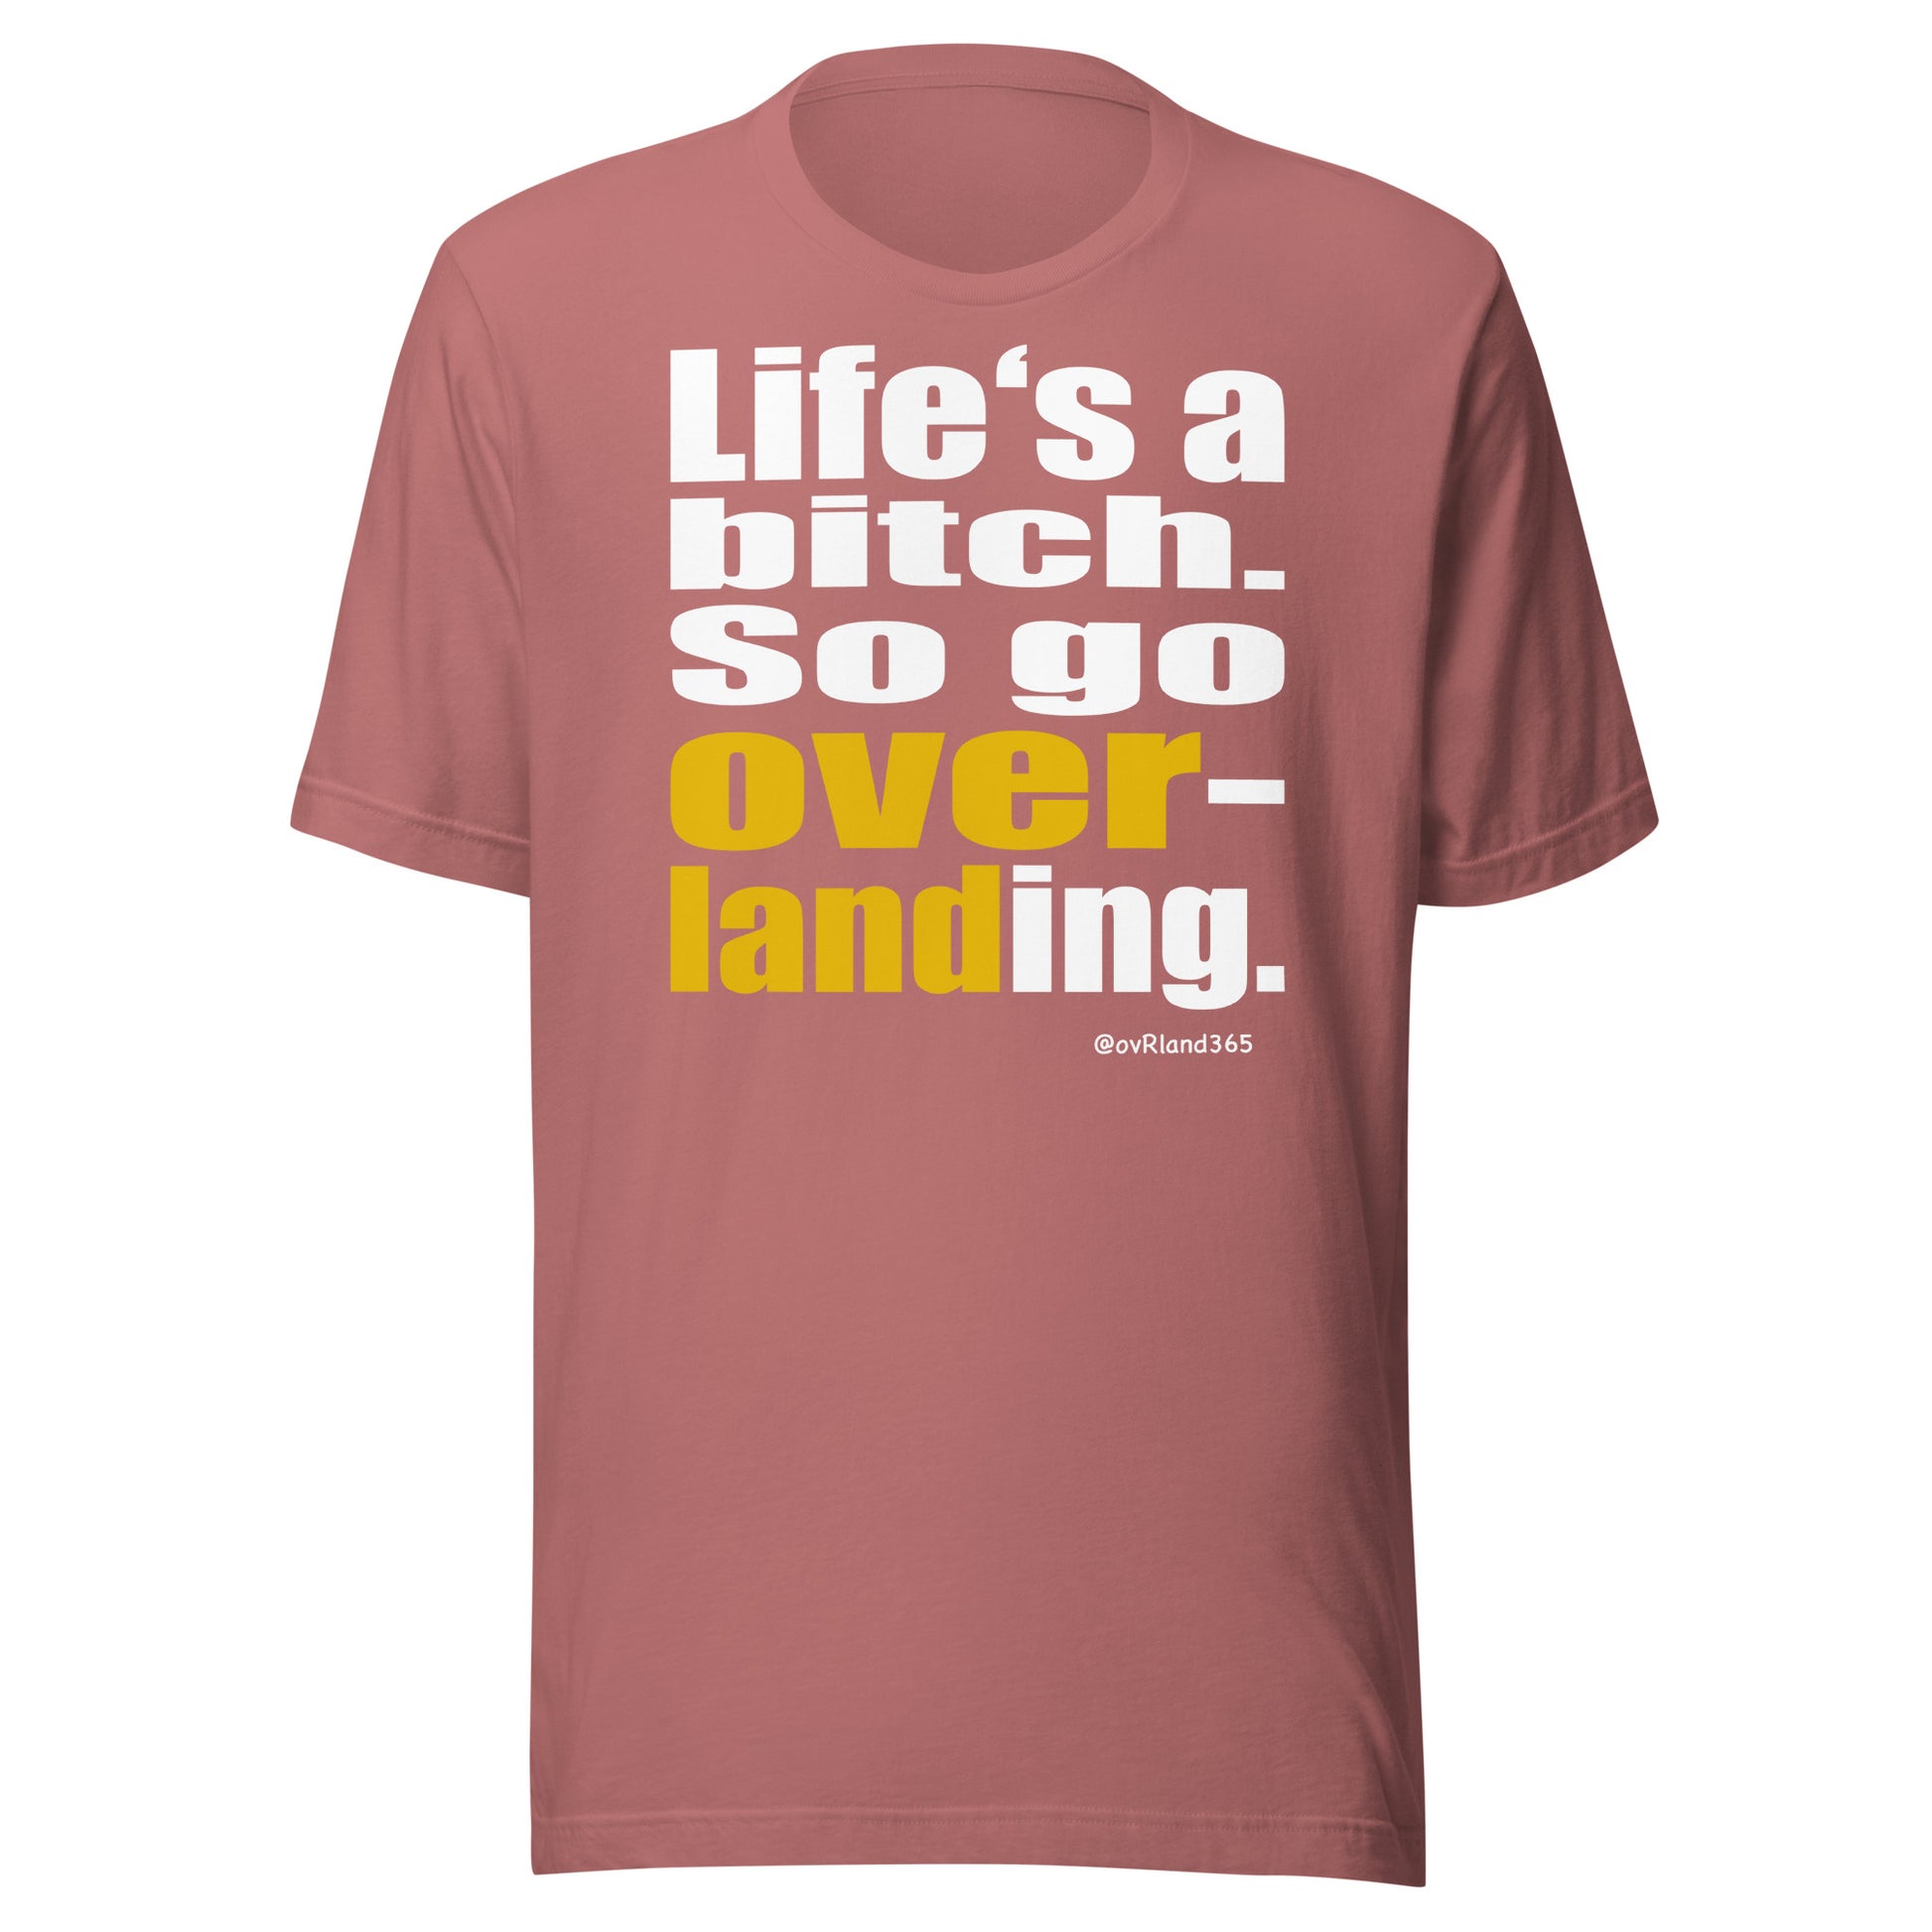 "Life's a bitch. So go overlanding." Pink t-shirt. overland365.com